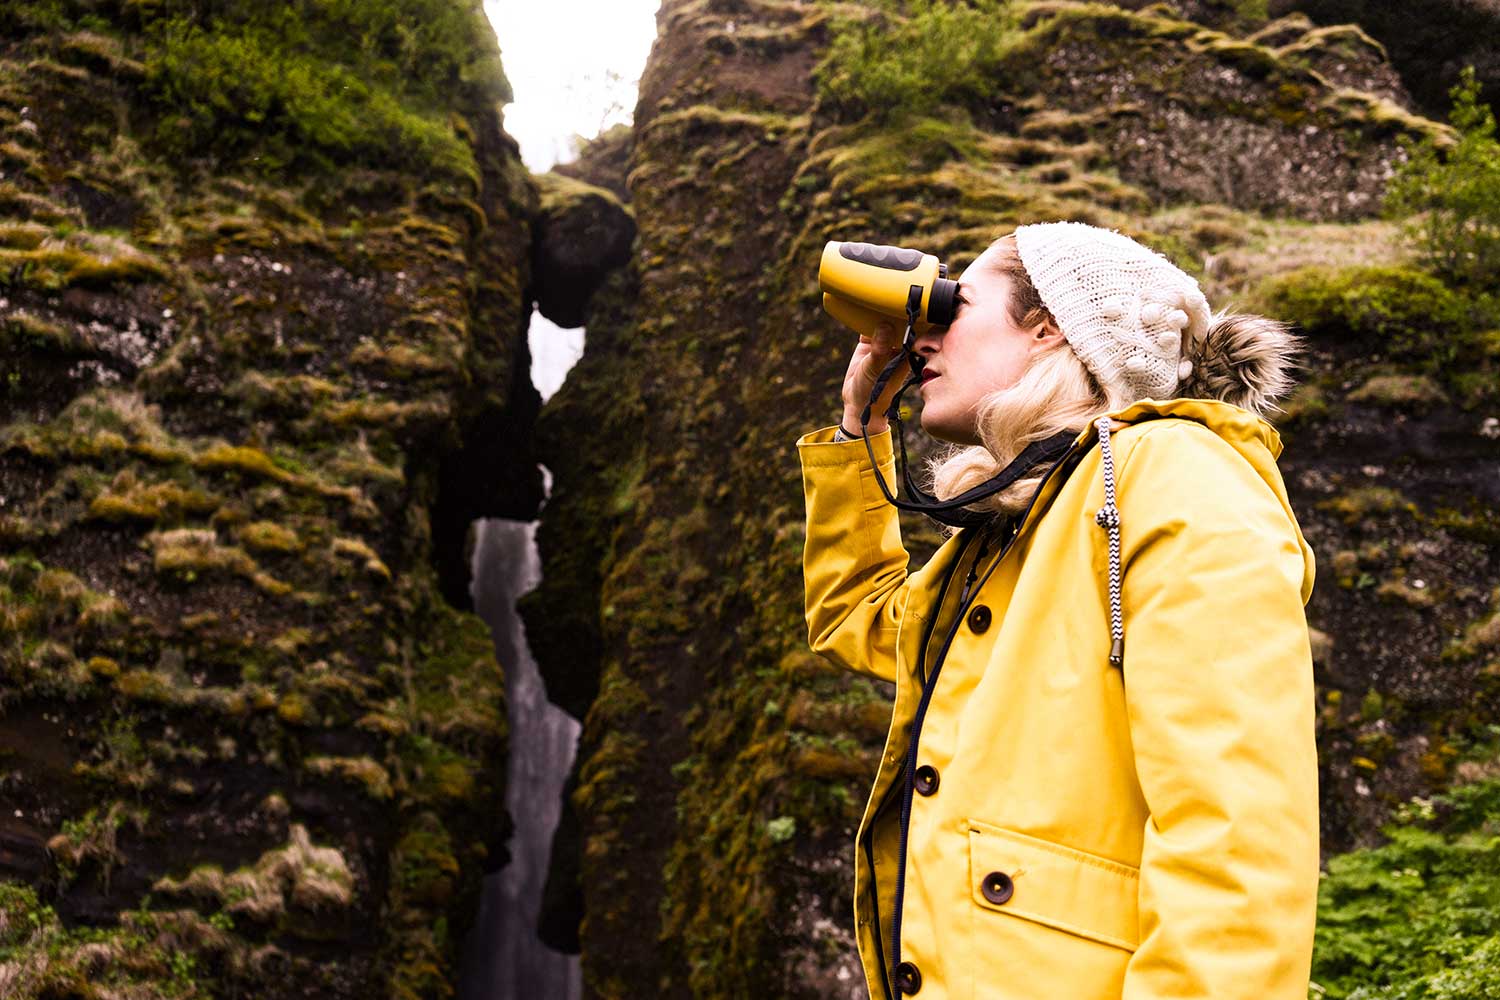 Woman in bright yellow jacket wildlife watching with binoculars.